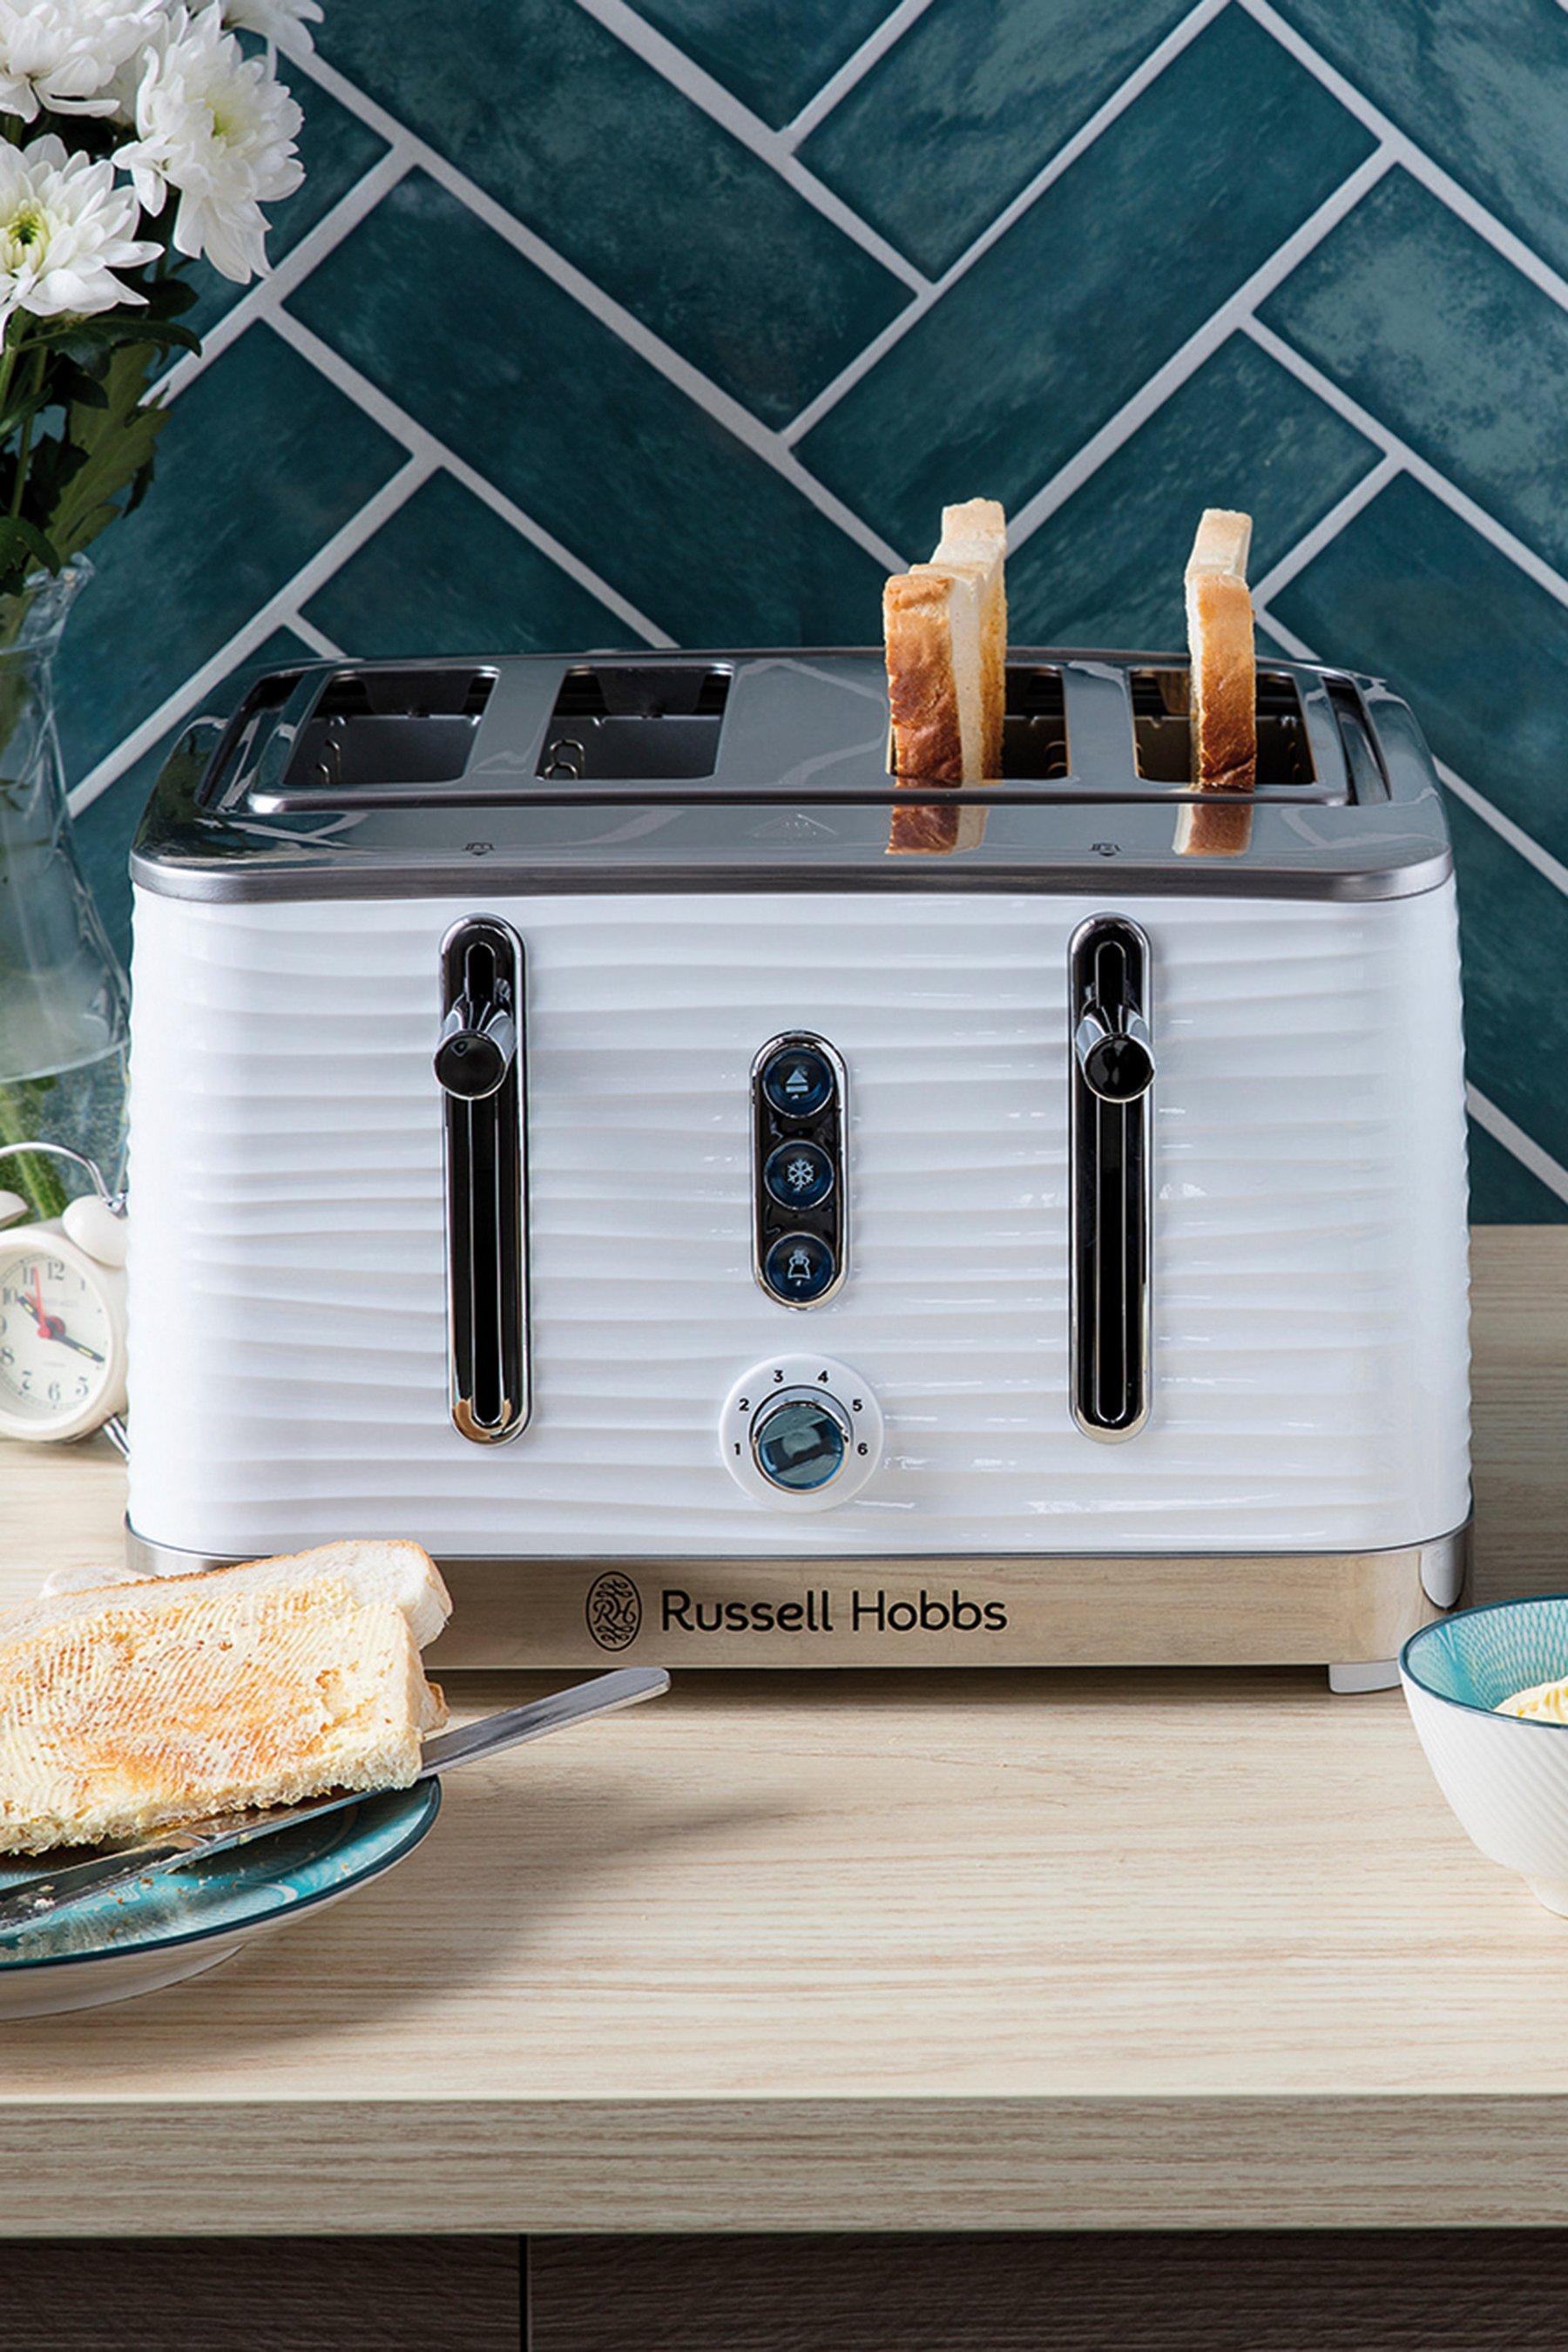 Russell Hobbs Toaster 2 Slice Inspire Cream Toasters Small